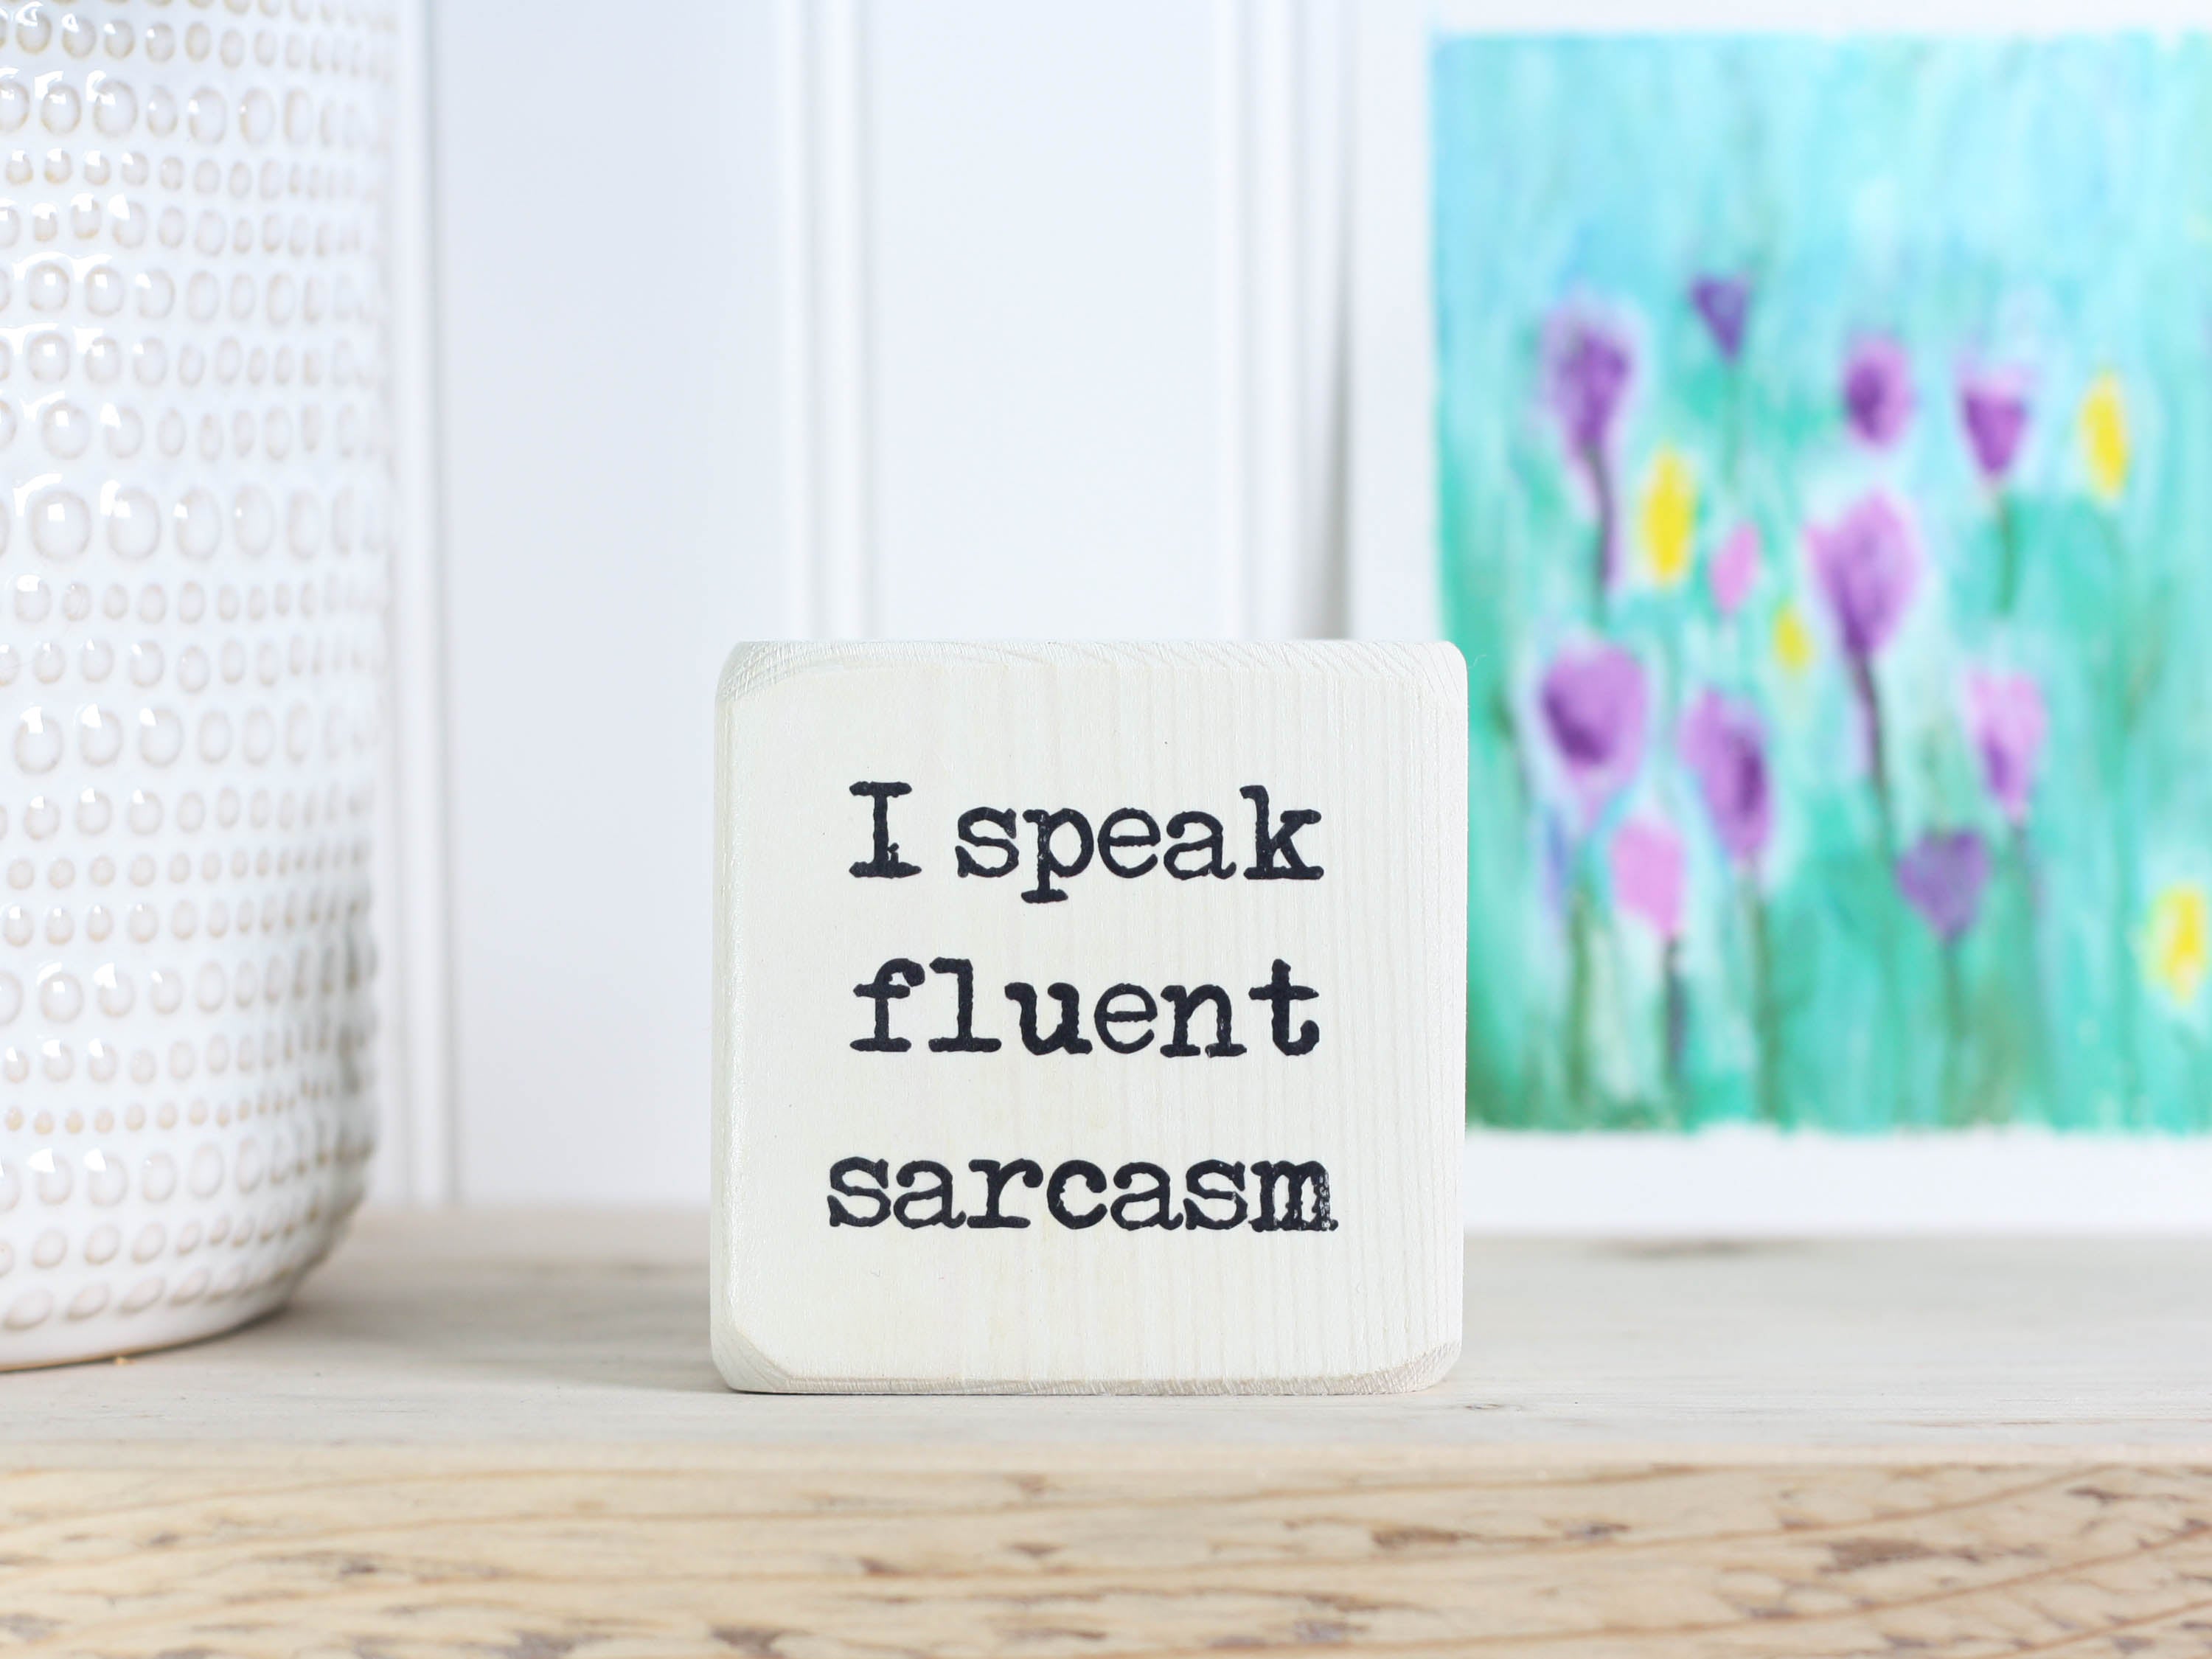 Mini wood sign in whitewash with the saying "I speak fluent sarcasm".